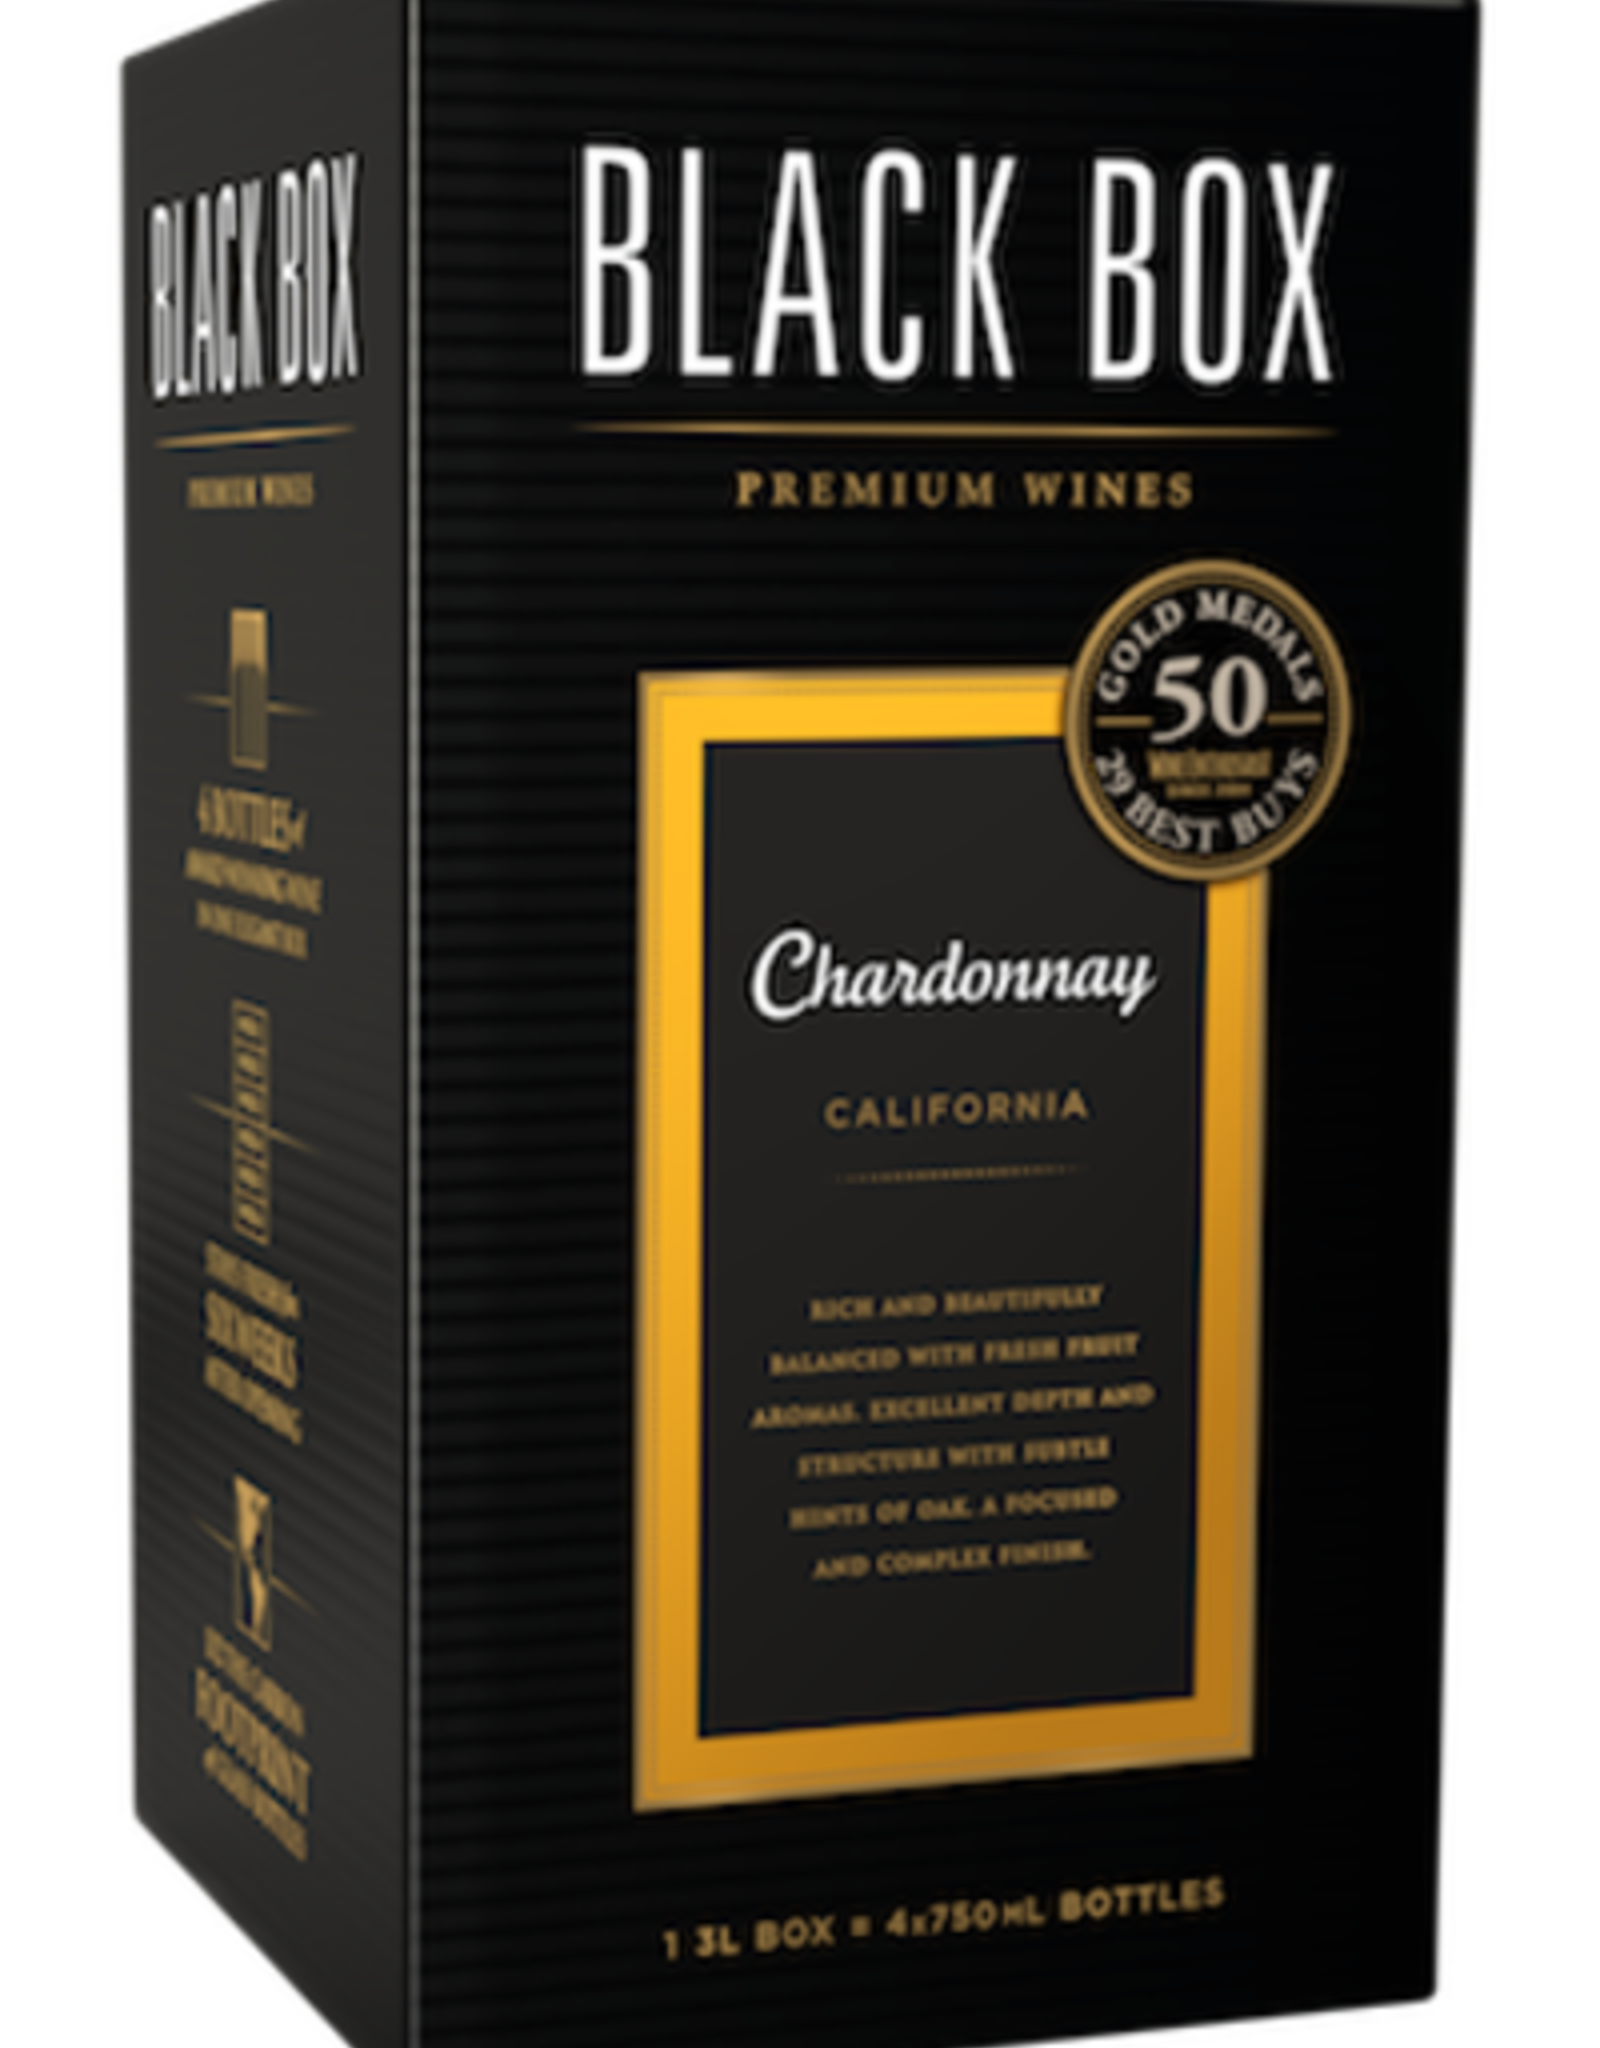 Black Box Buttery Chardonnay